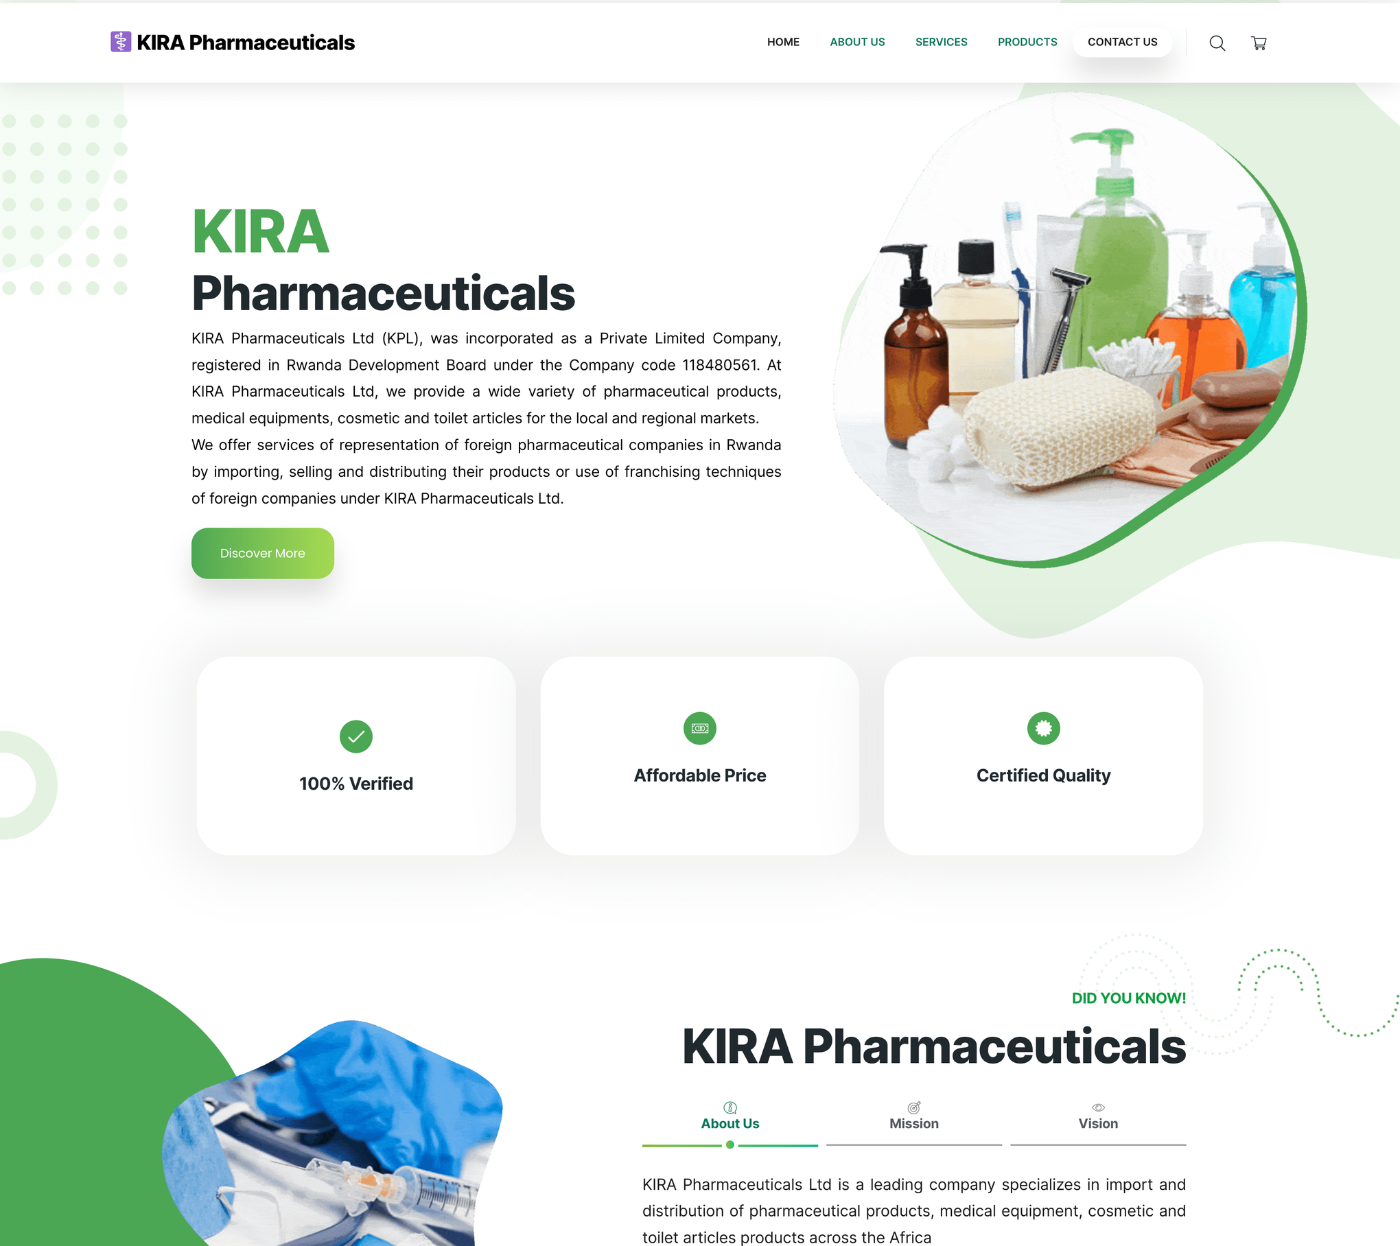 KIRA Pharmaceuticals